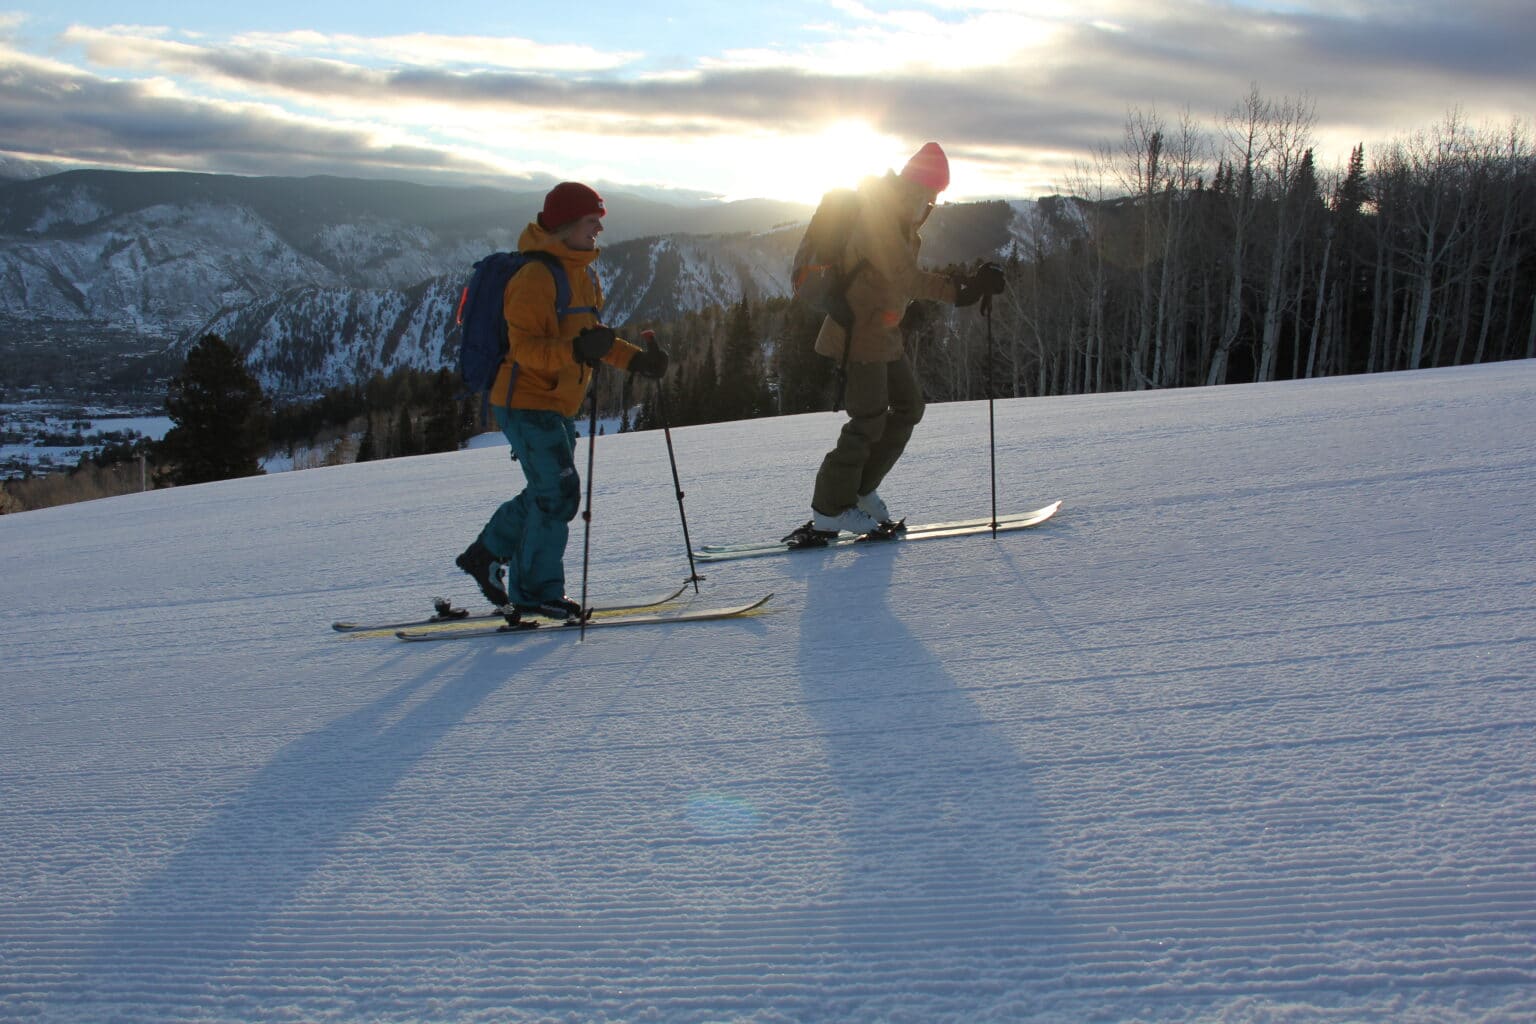 ski resort uphill travel